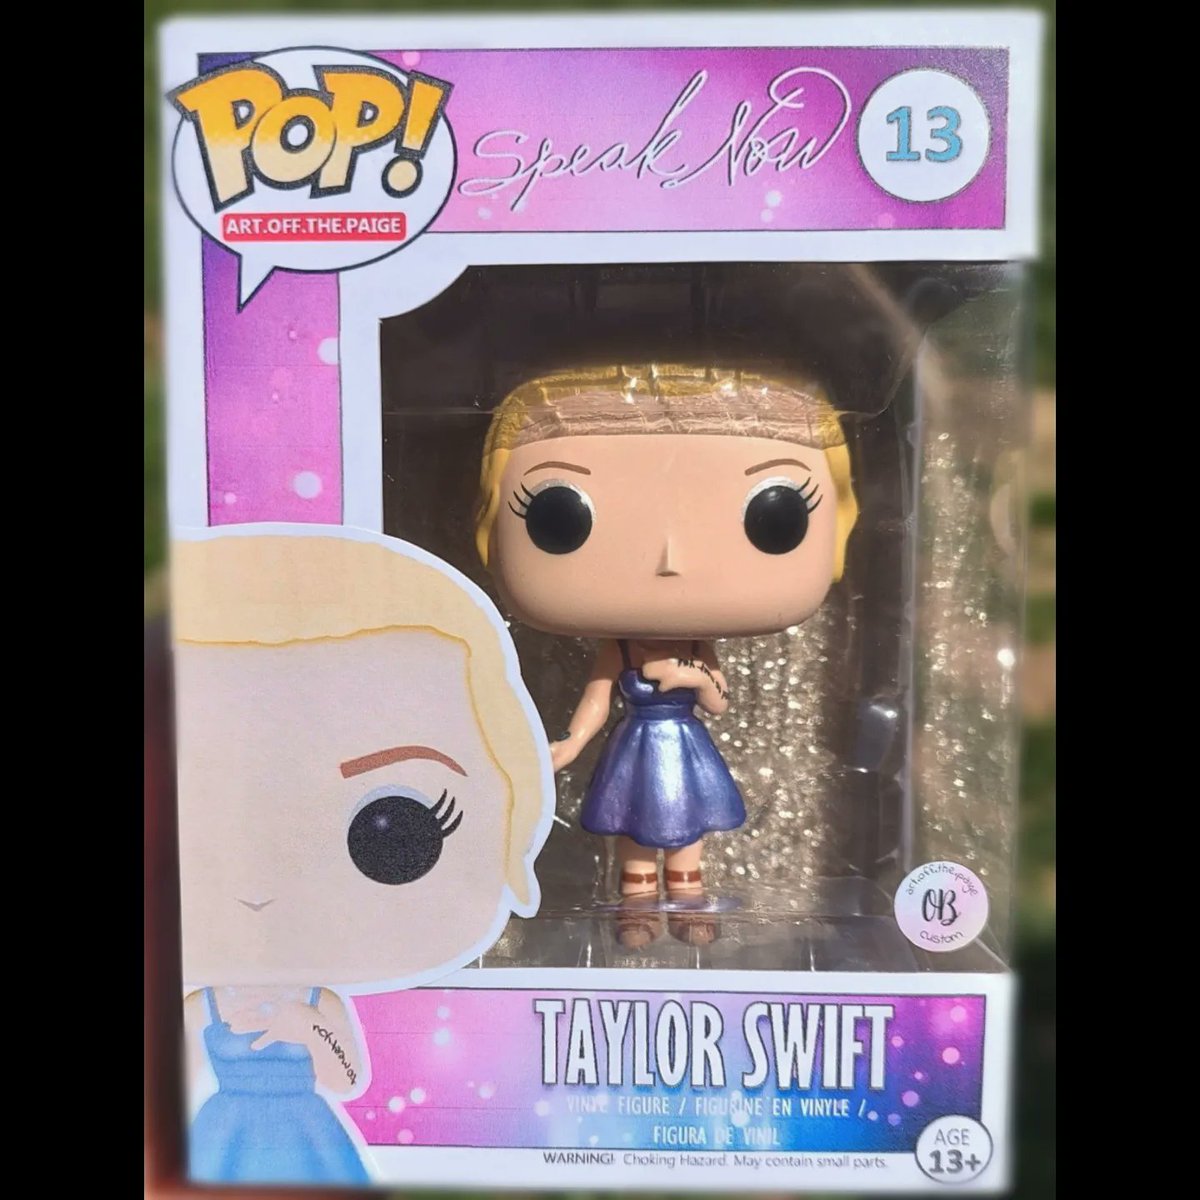 Taylor Swift 1989 Custom Funko Pop! - art.off.the.paige